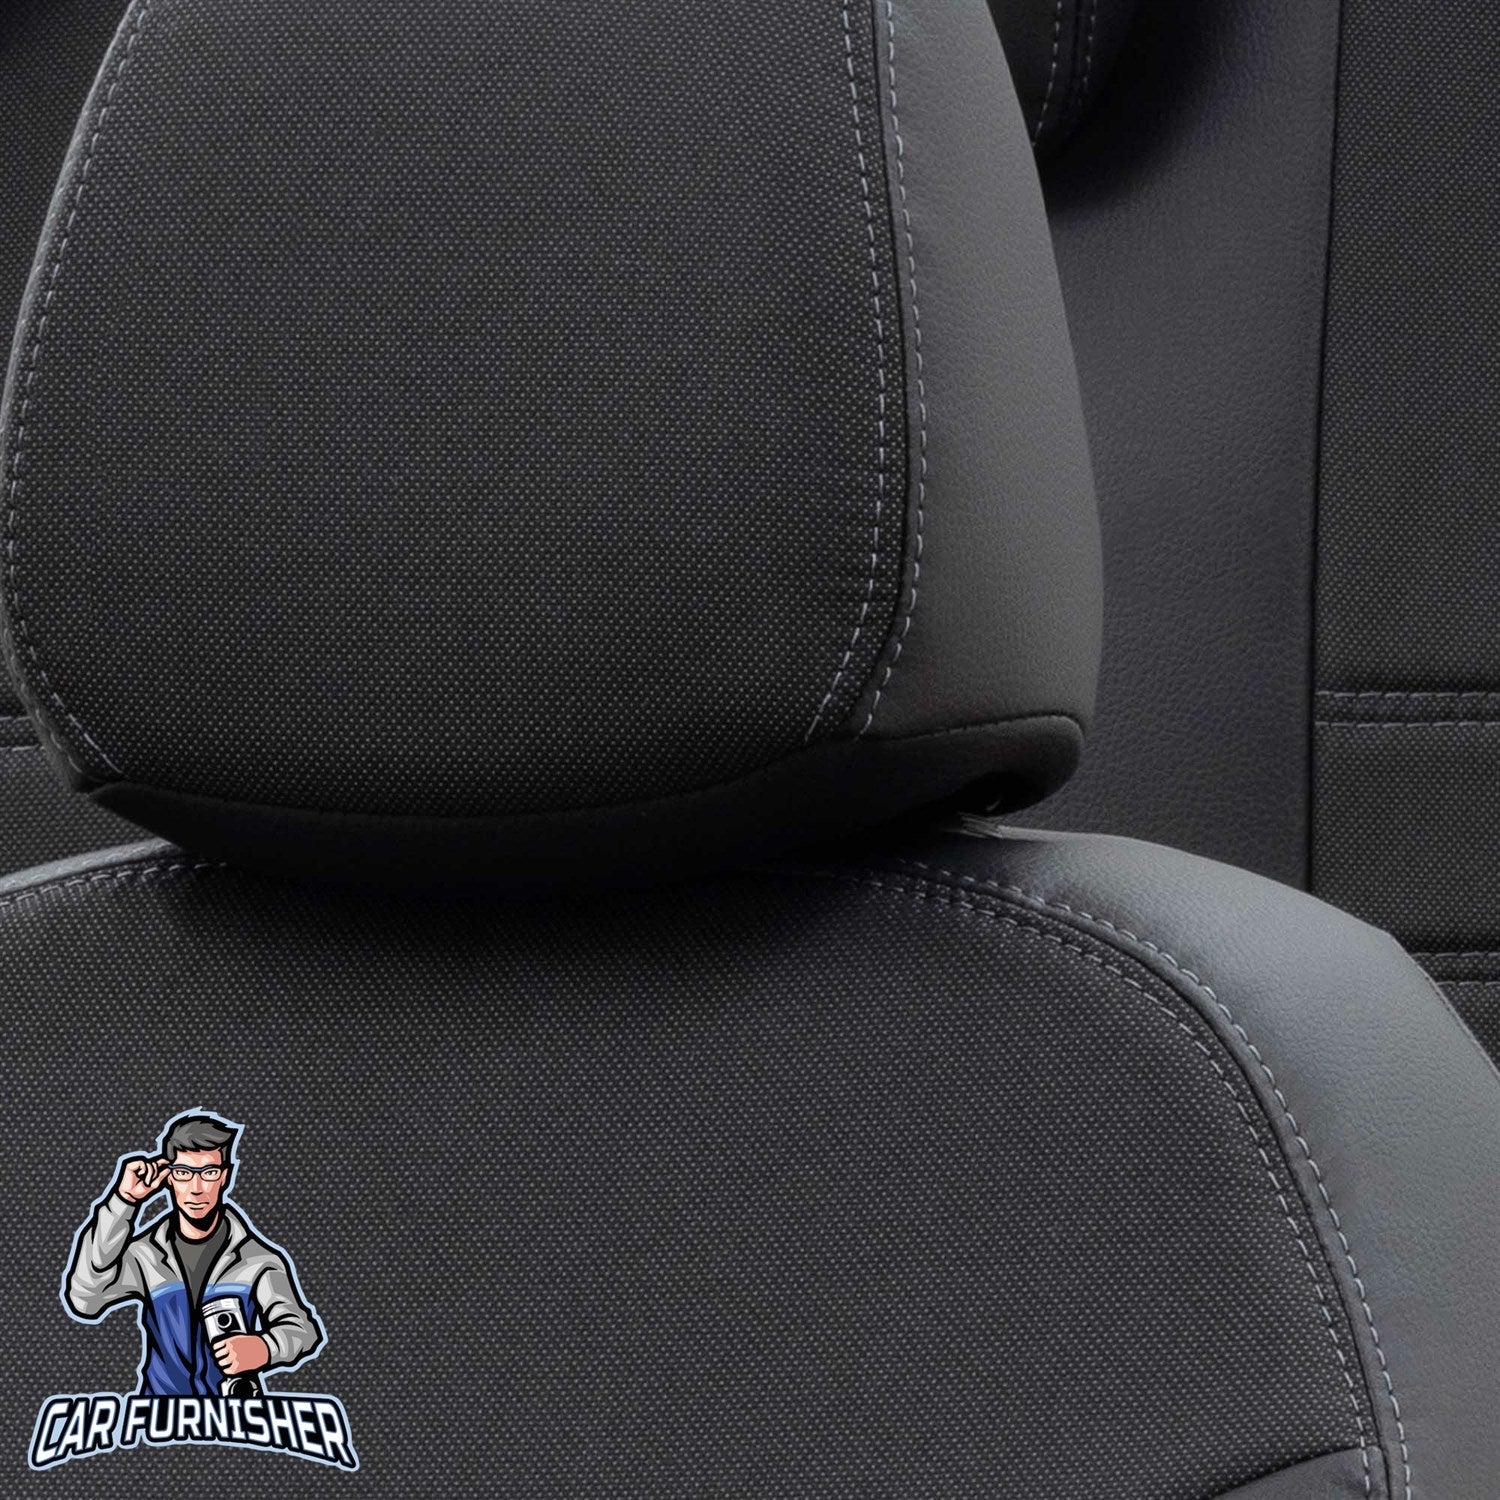 Nissan Qashqai Seat Covers Paris Leather & Jacquard Design Black Leather & Jacquard Fabric